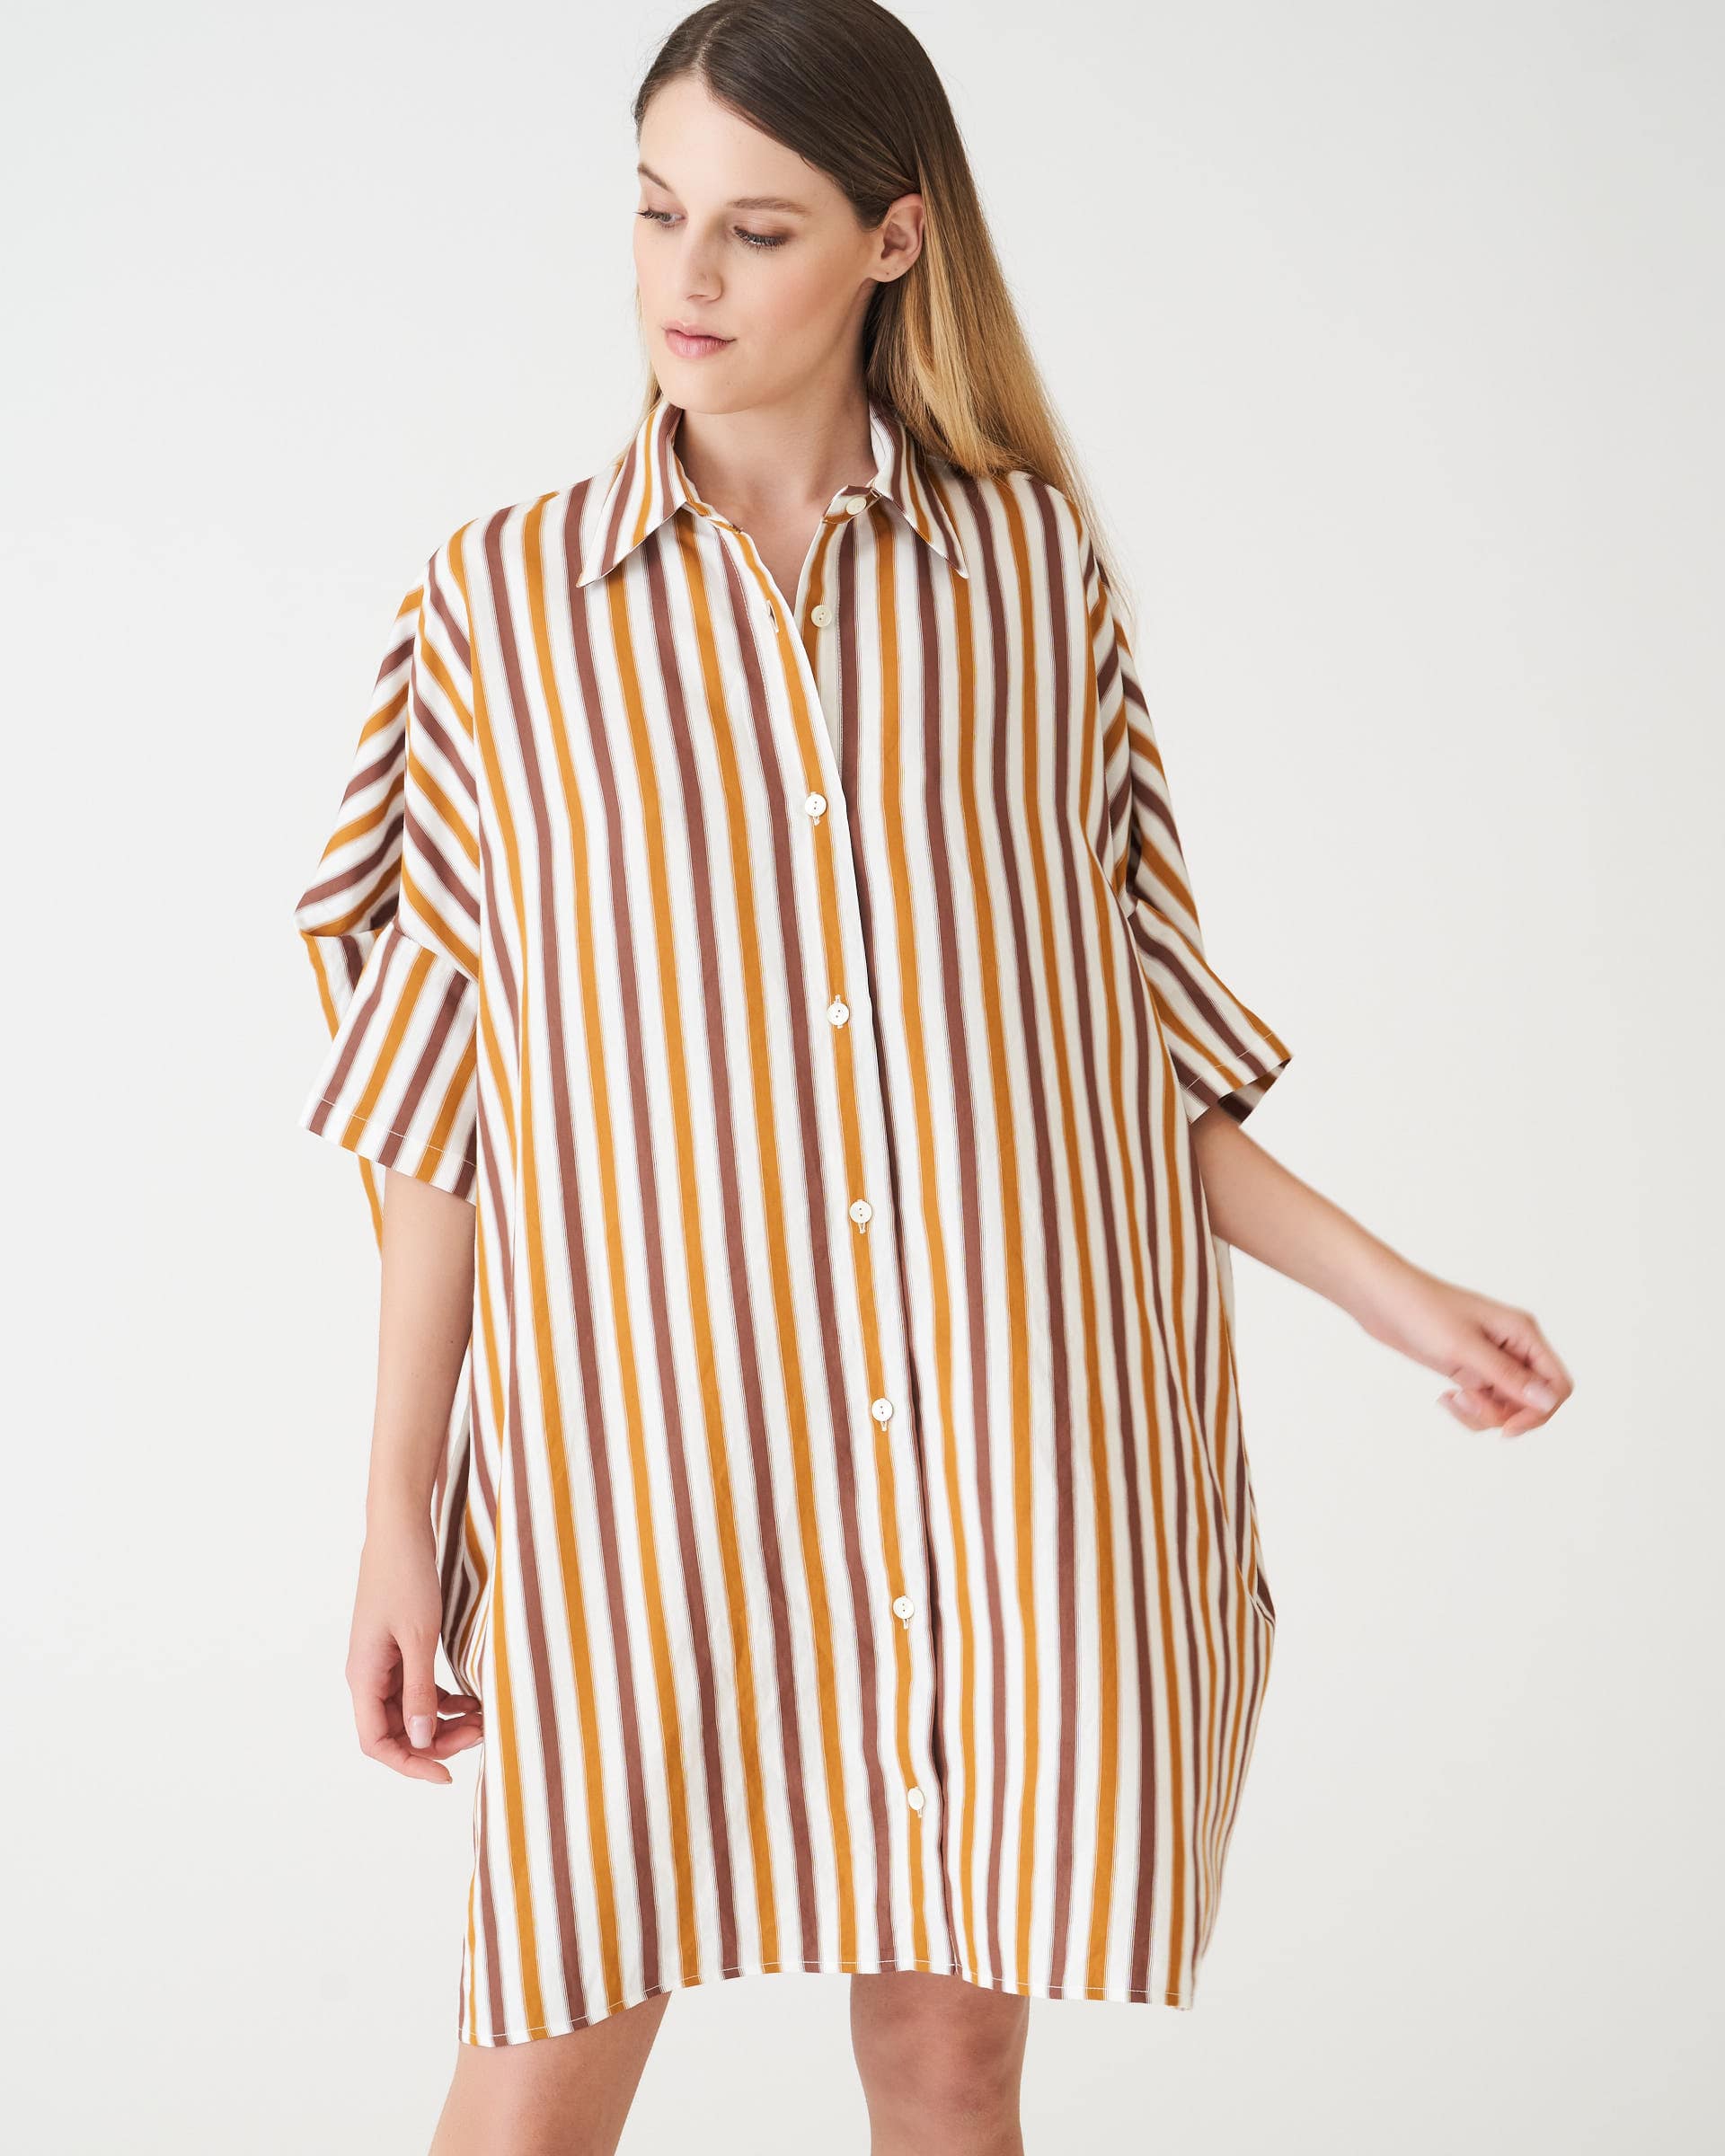 The Market Store | Striped Shirt Dress